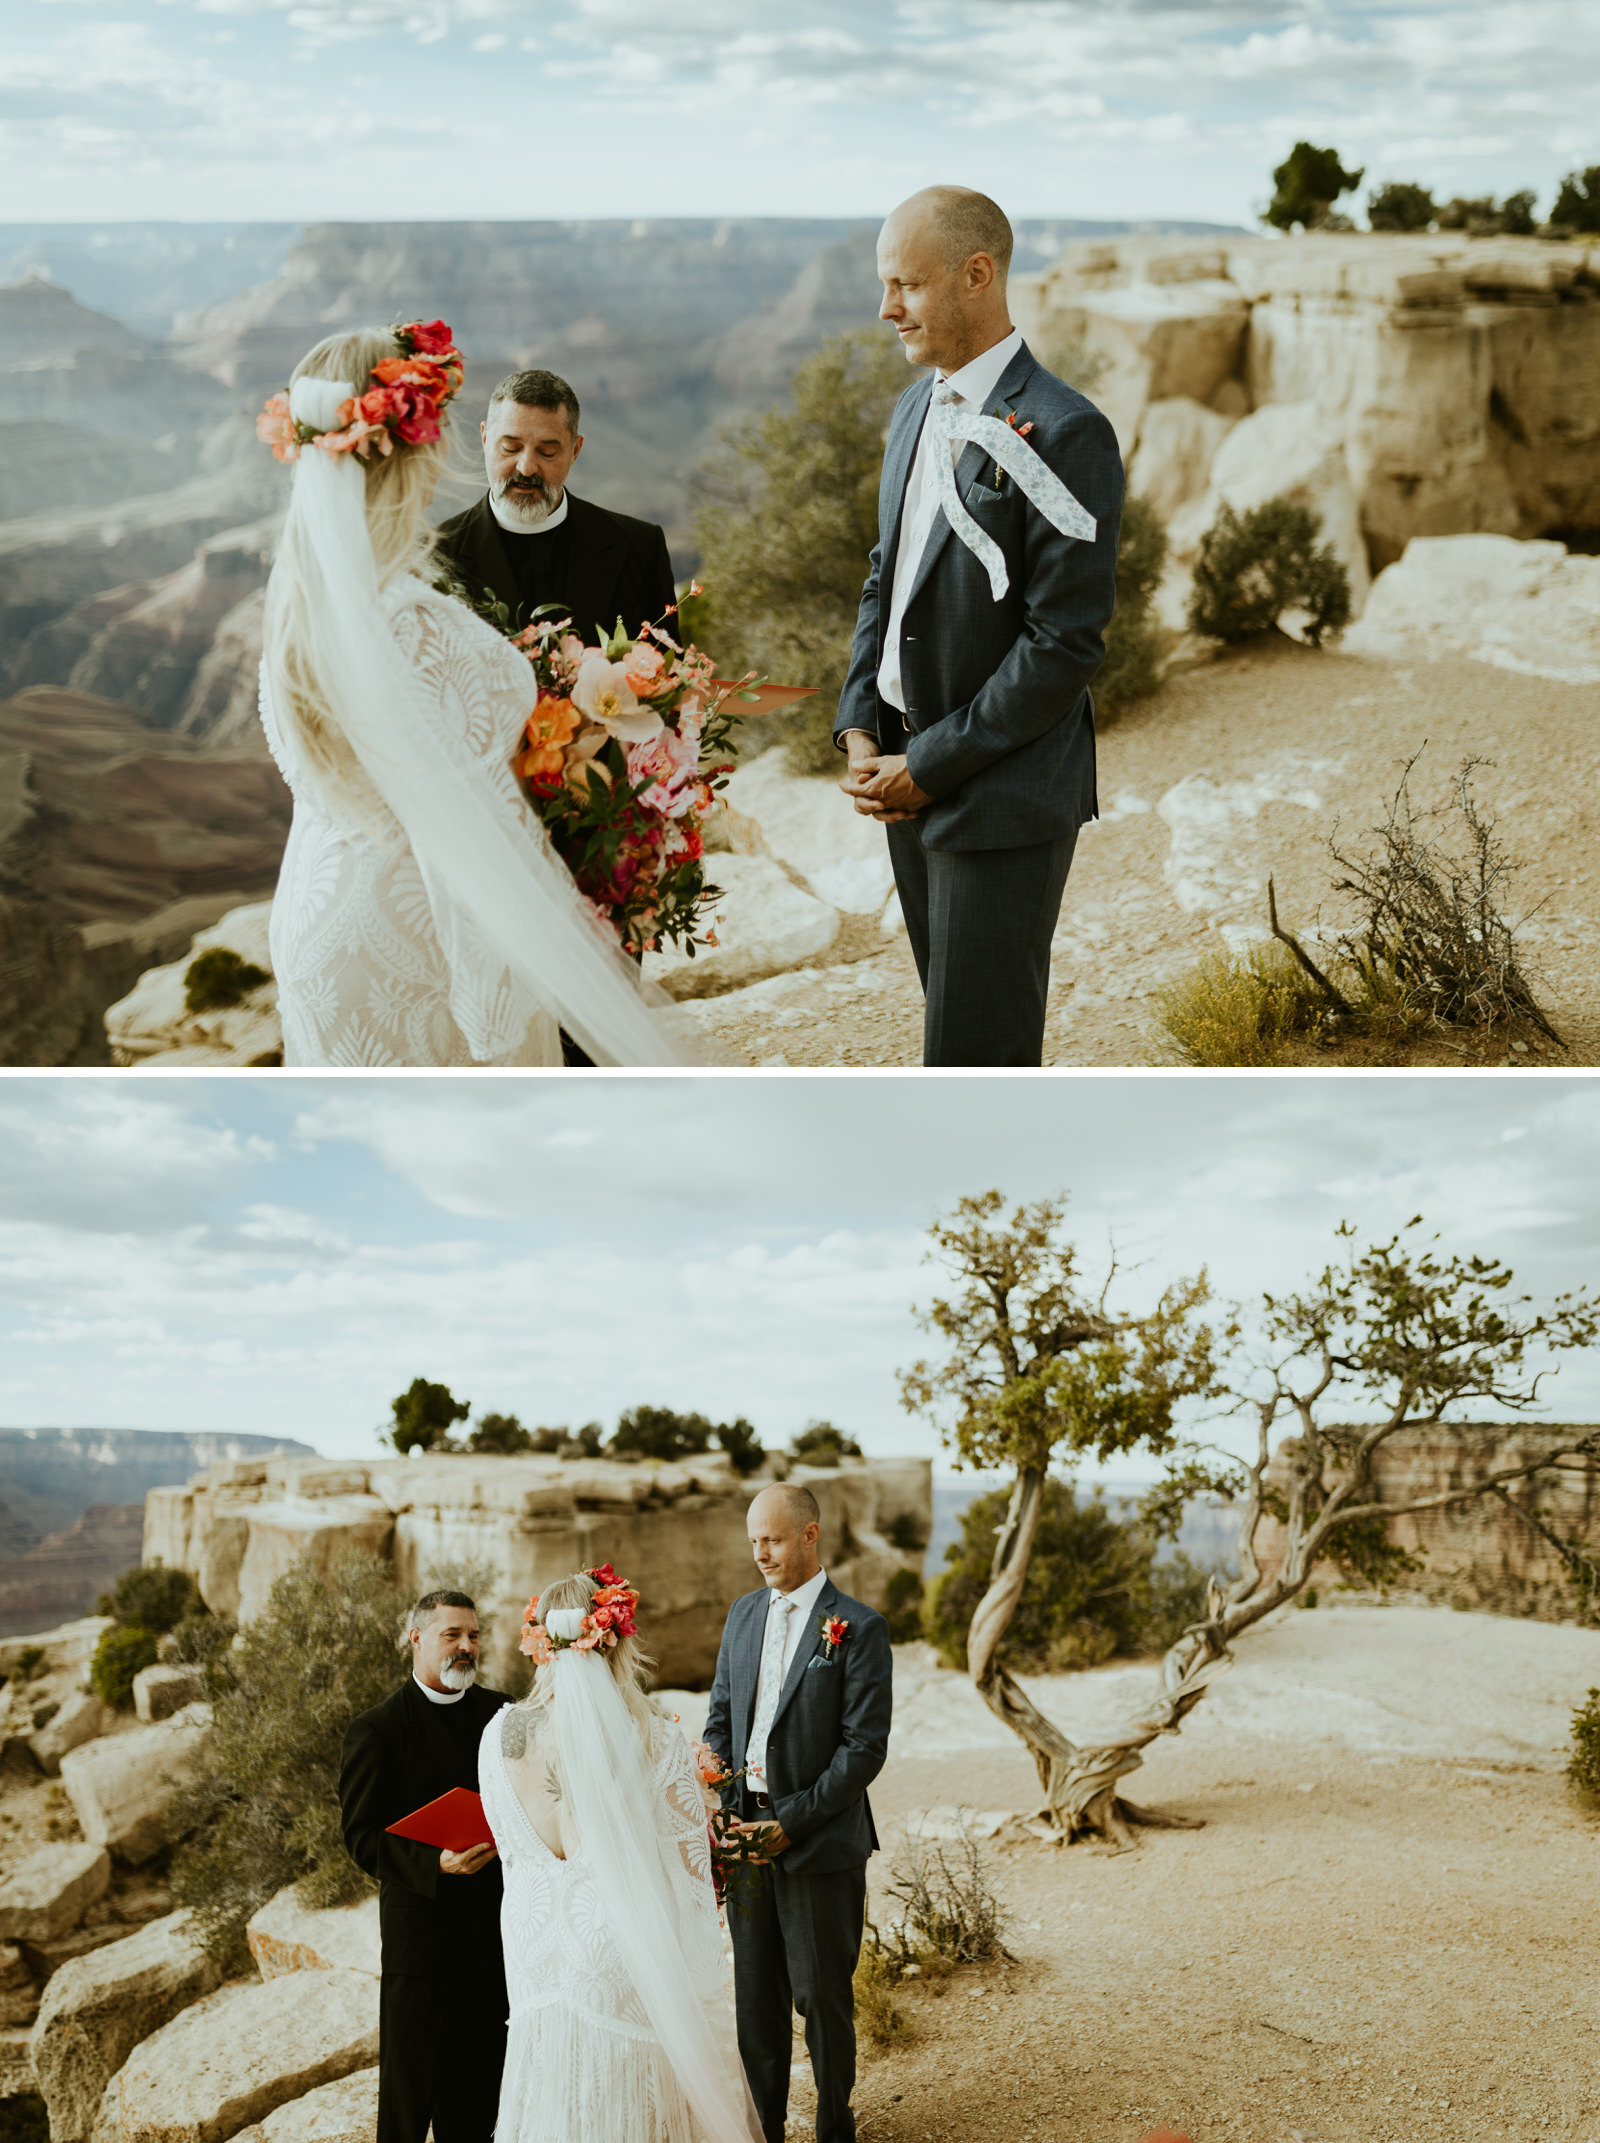 Grand Canyon National Park Elopement Moran Point Arizona boho wedding Photography wedding ceremony scenic view flower crown boho style inspo.jpg